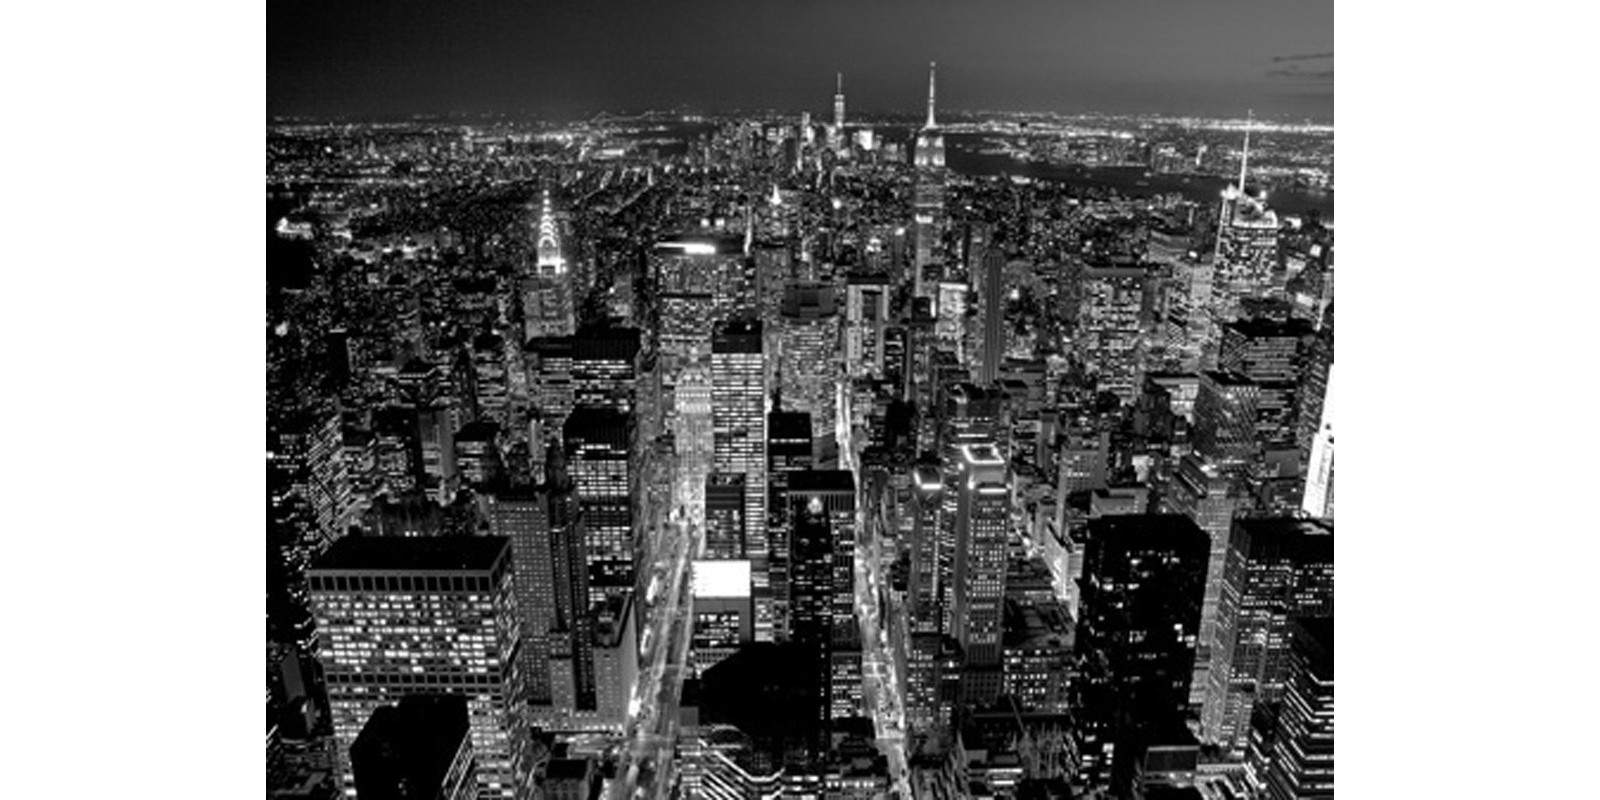 Richard Berenholtz - Midtown Manhattan at night